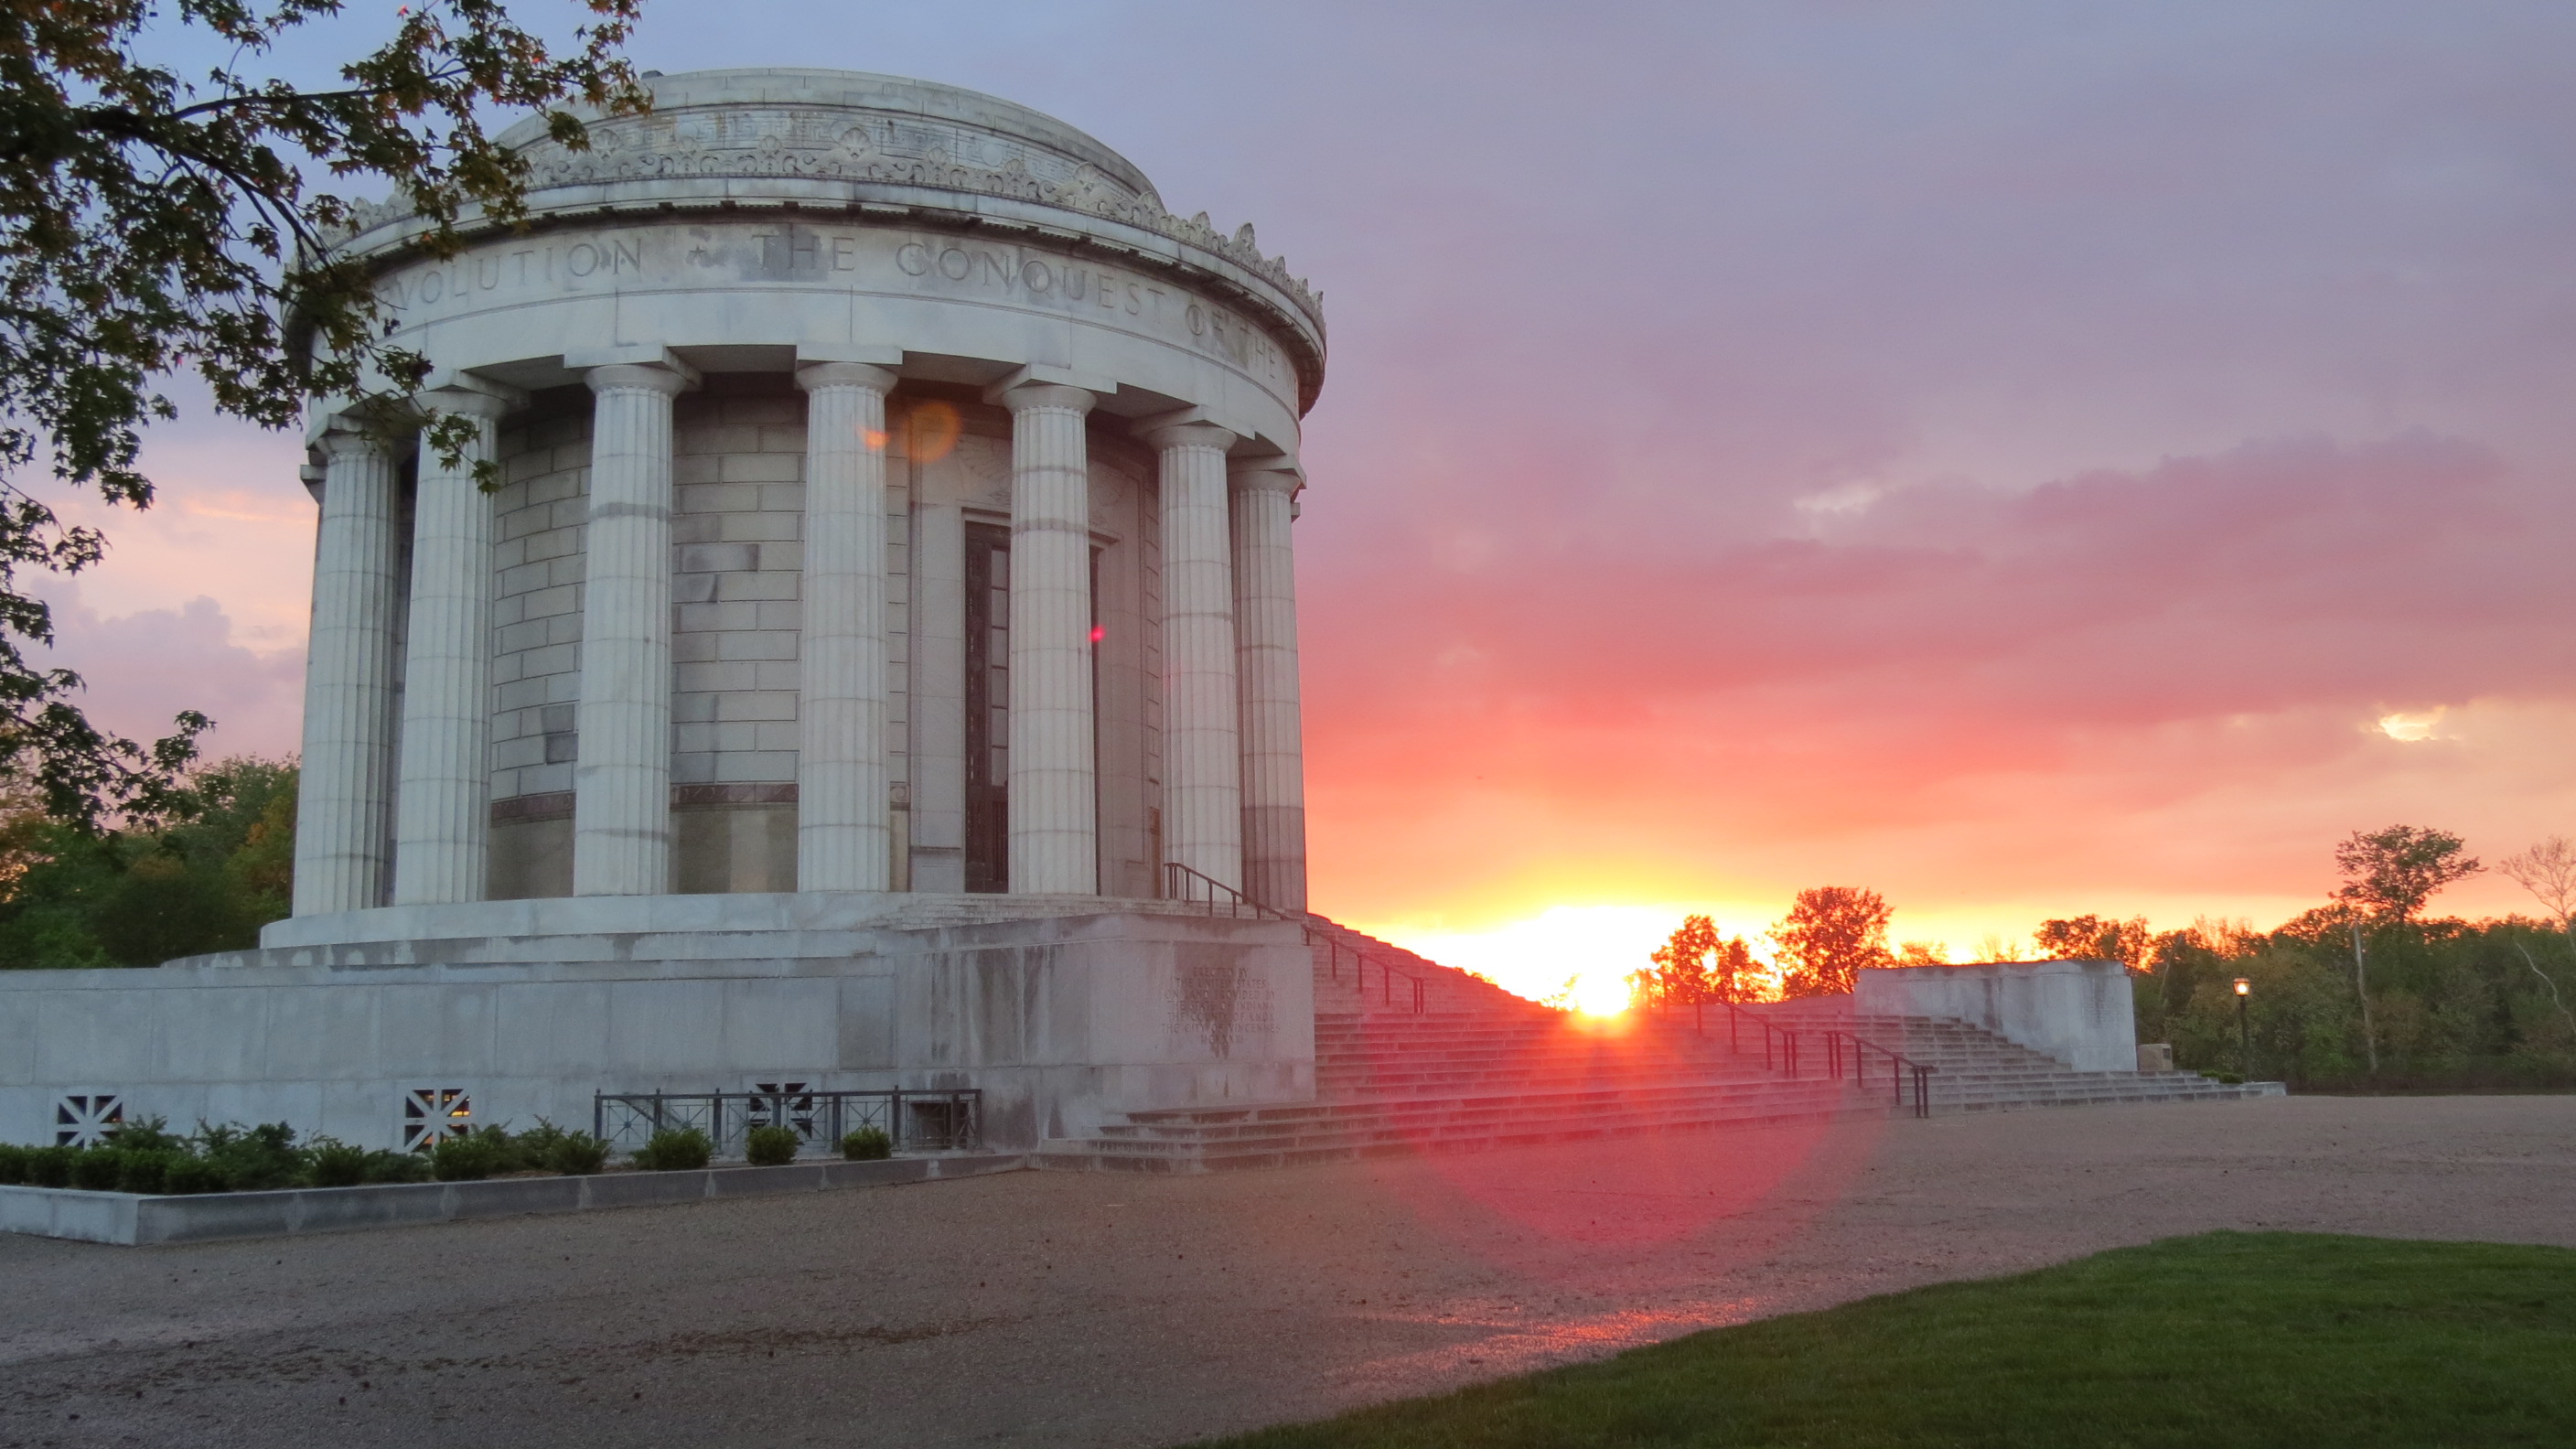 Sun setting behind the Clark Memorial